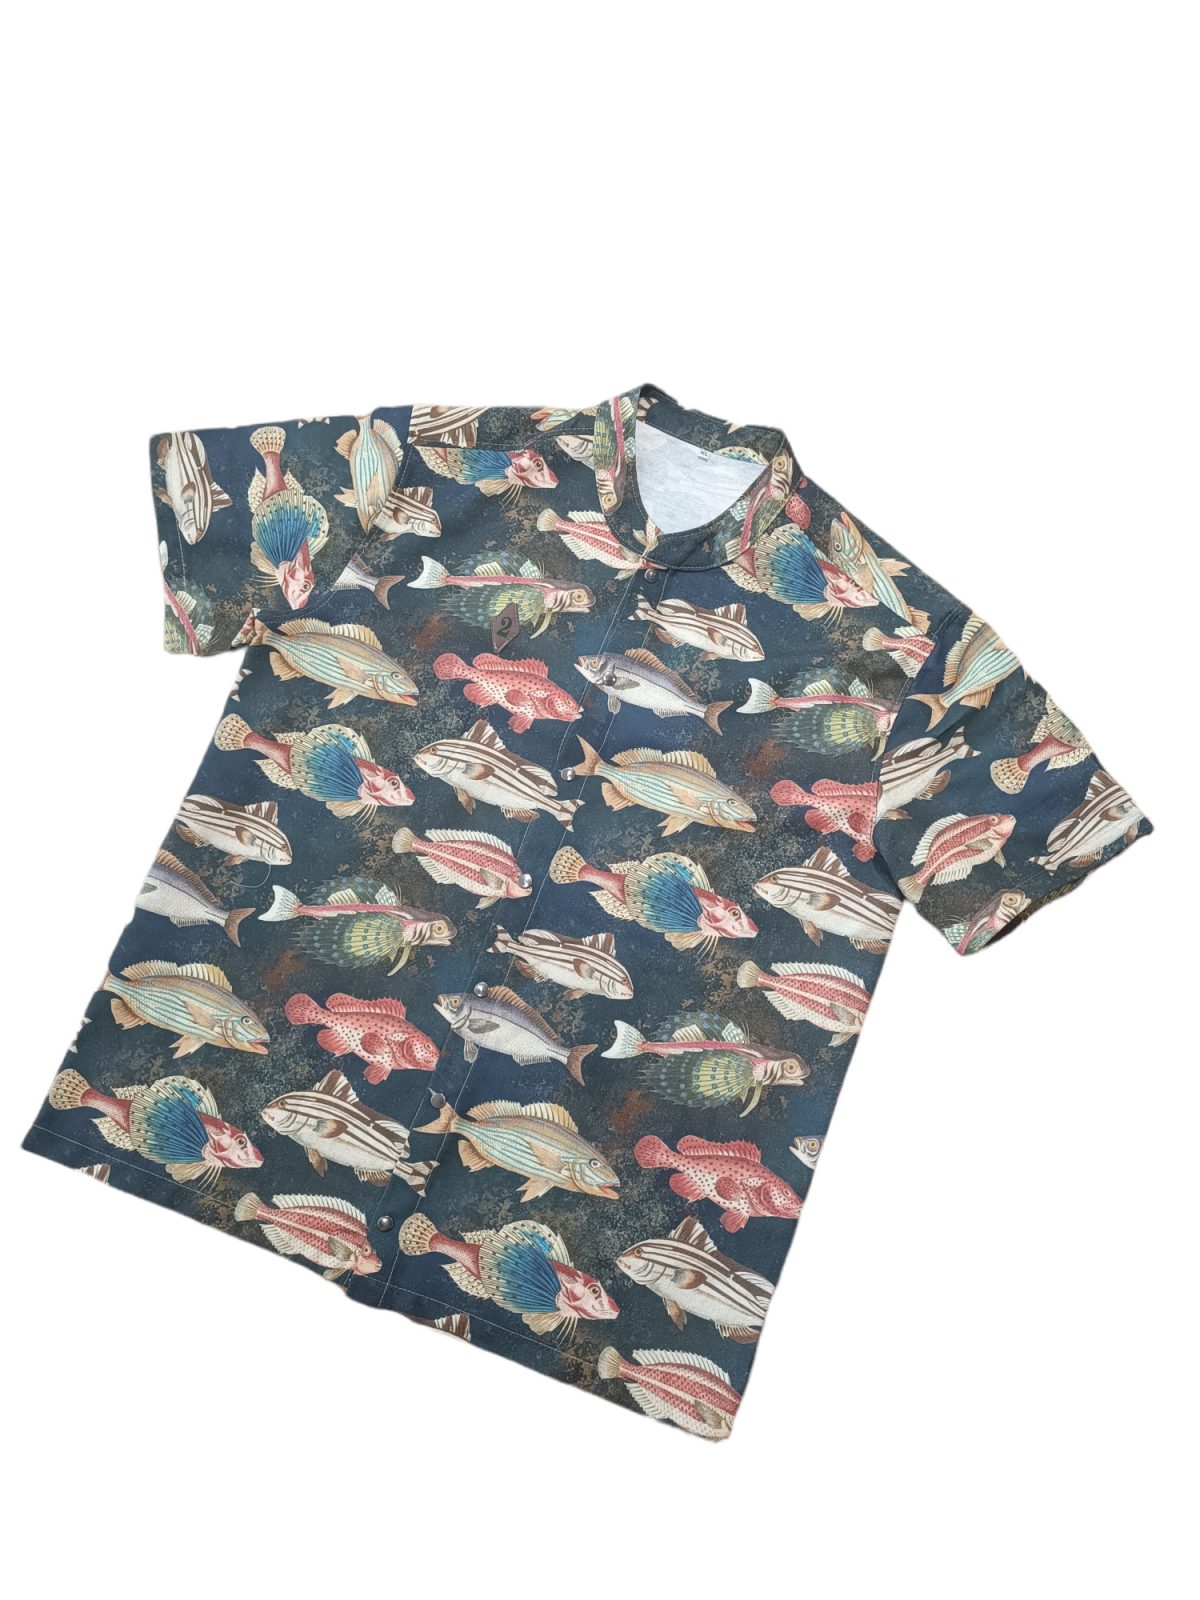 fish shirt – 2 Handmade Aprons since 2015